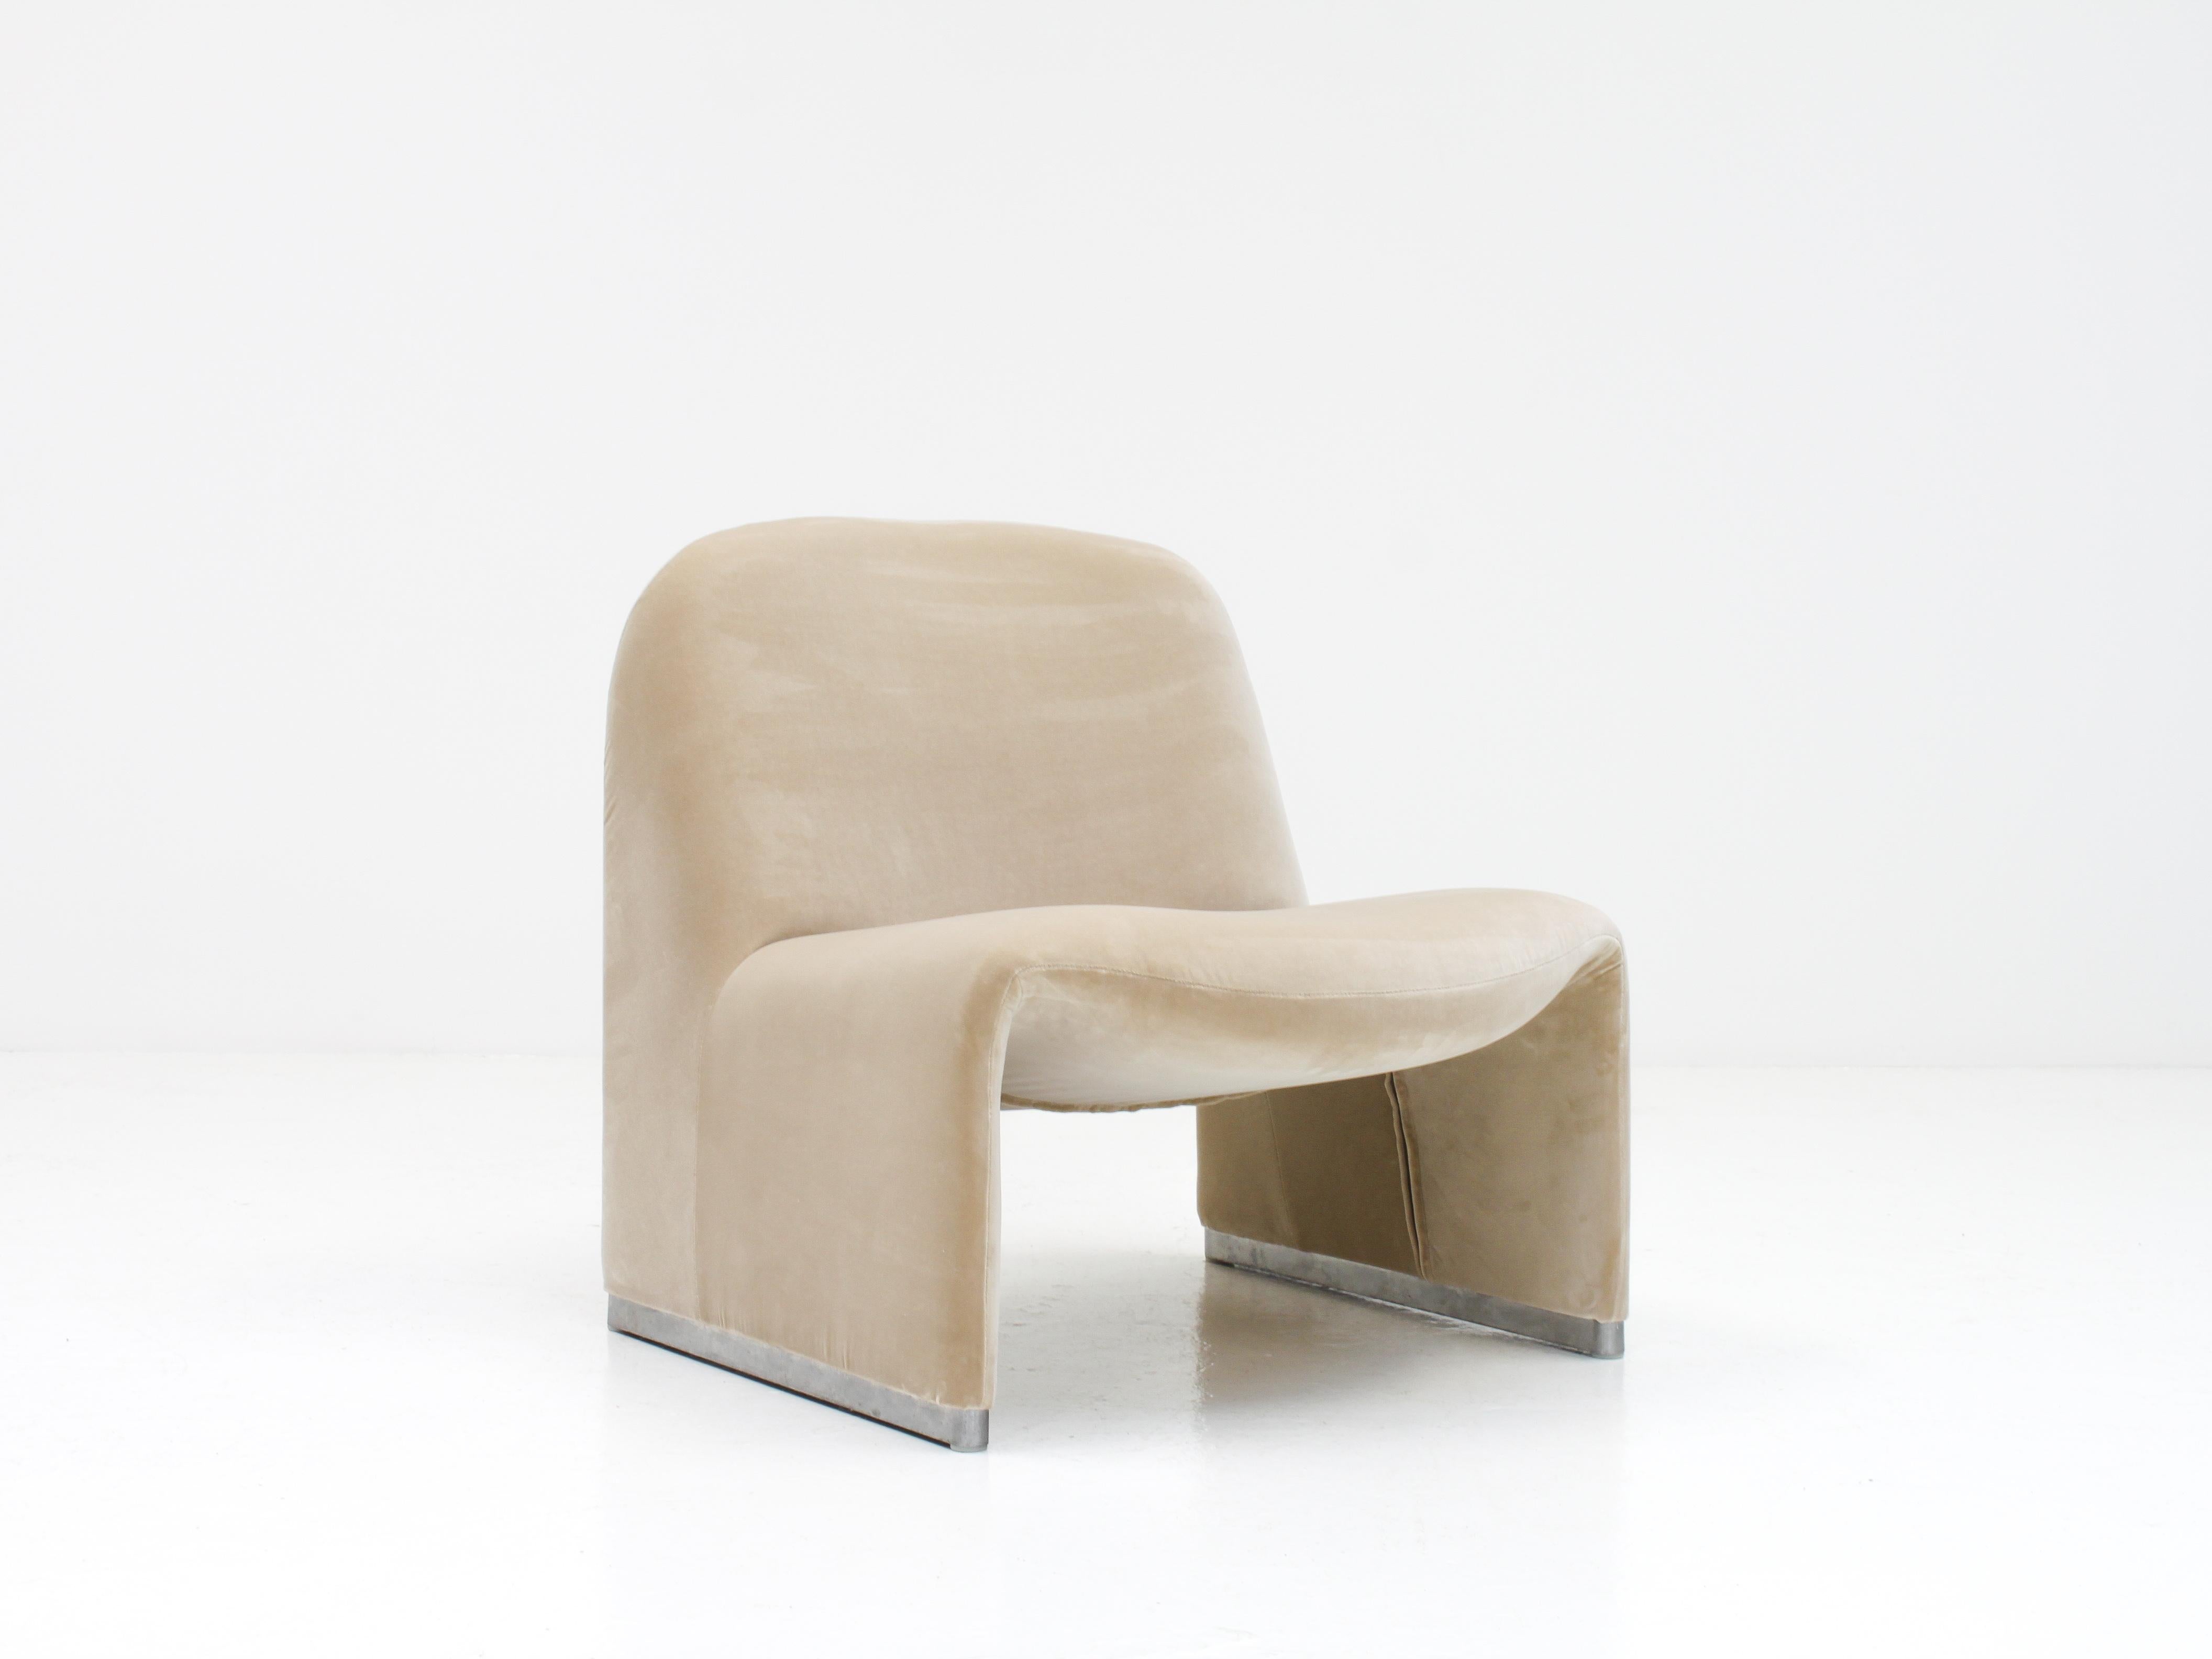 Steel Giancarlo Piretti “Alky” Chair in New Velvet, Artifort, 1970s - *Customizable*